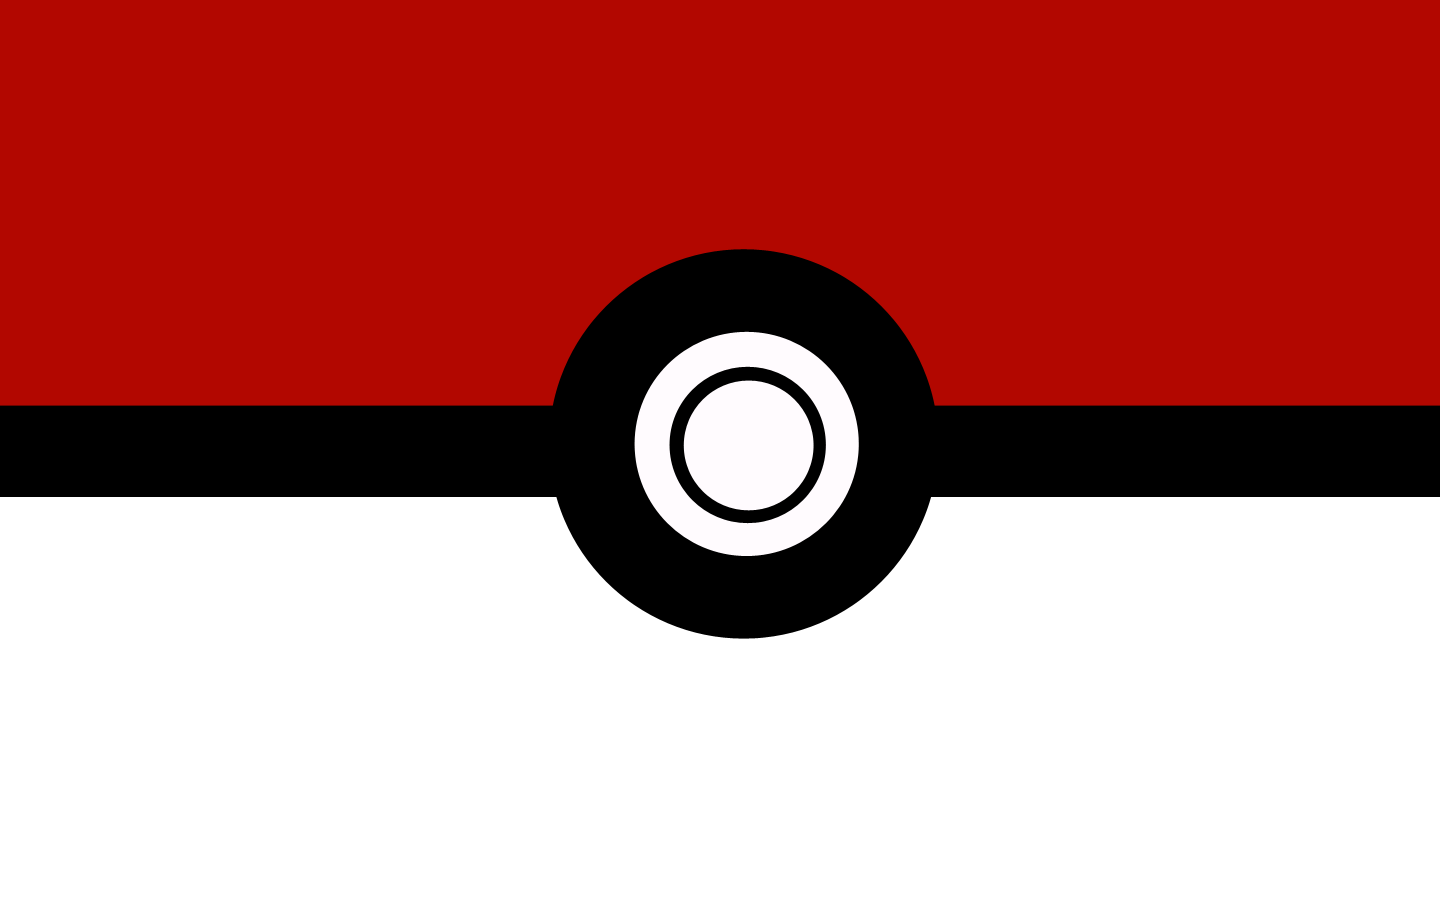 El fin de la Era Pokémon? - 3 - junio 5, 2022